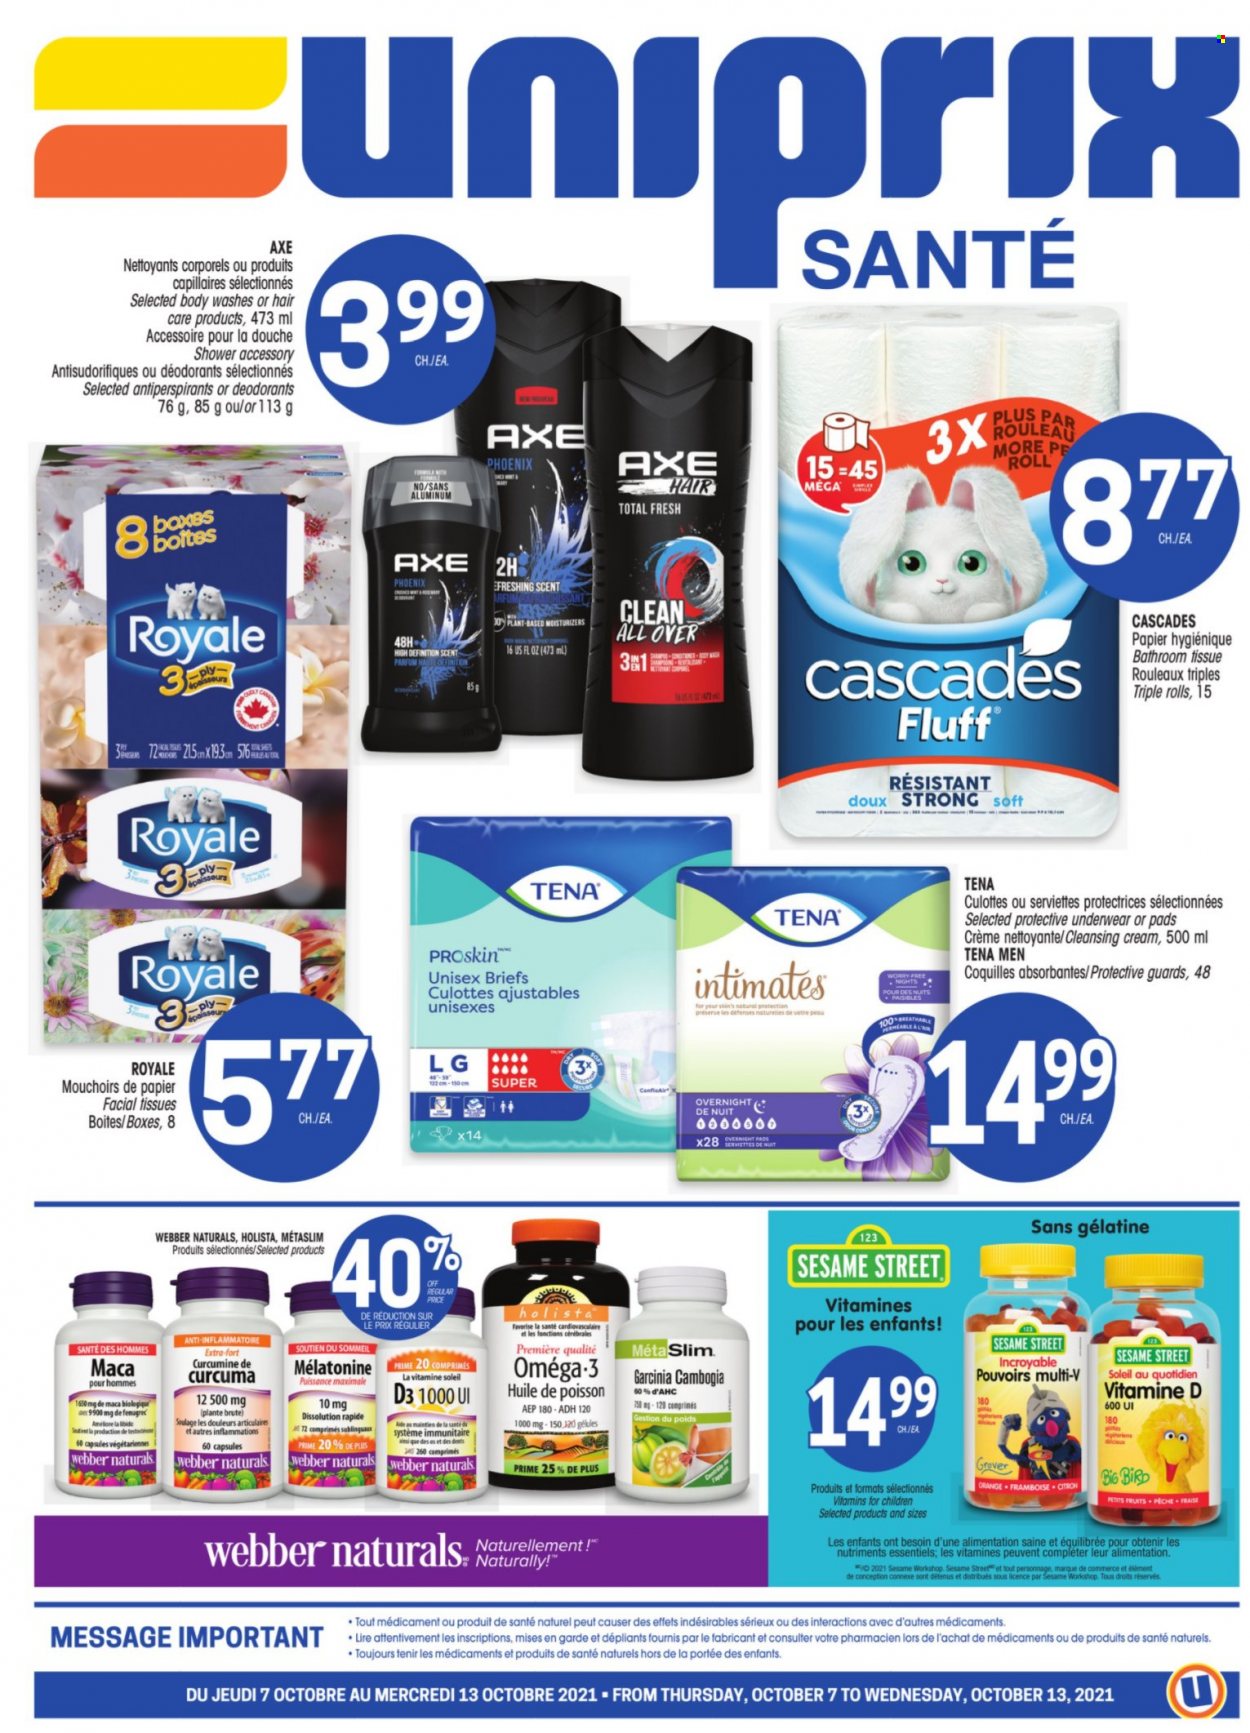 thumbnail - Uniprix Santé Flyer - October 07, 2021 - October 13, 2021 - Sales products - Sesame Street, bath tissue, sanitary pads, facial tissues, moisturizer, Omega-3, vitamin D3, deodorant. Page 1.